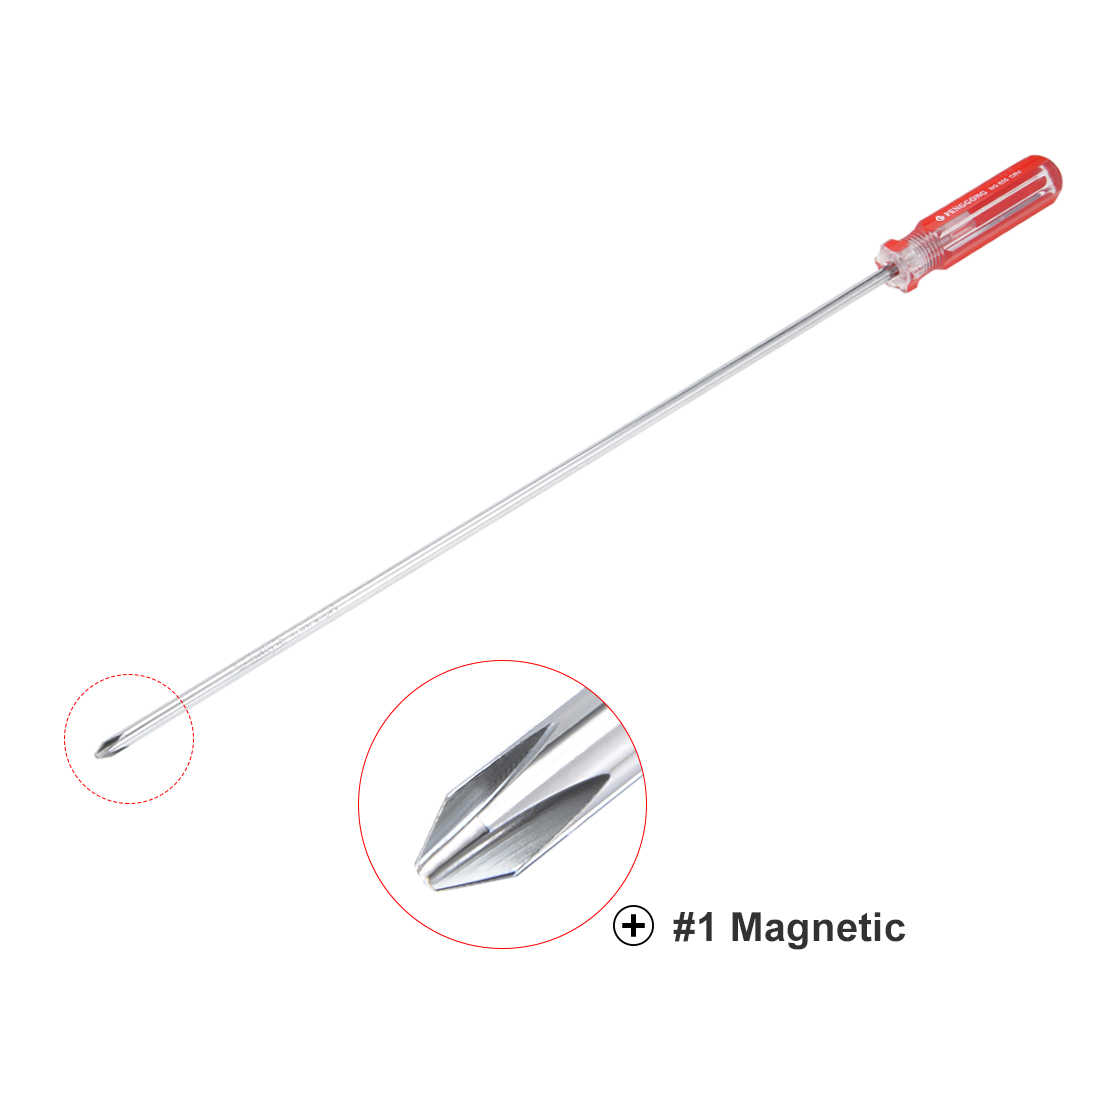 Tasharina Magnetic #1 Phillips Screwdriver with 12 Inch Shaft